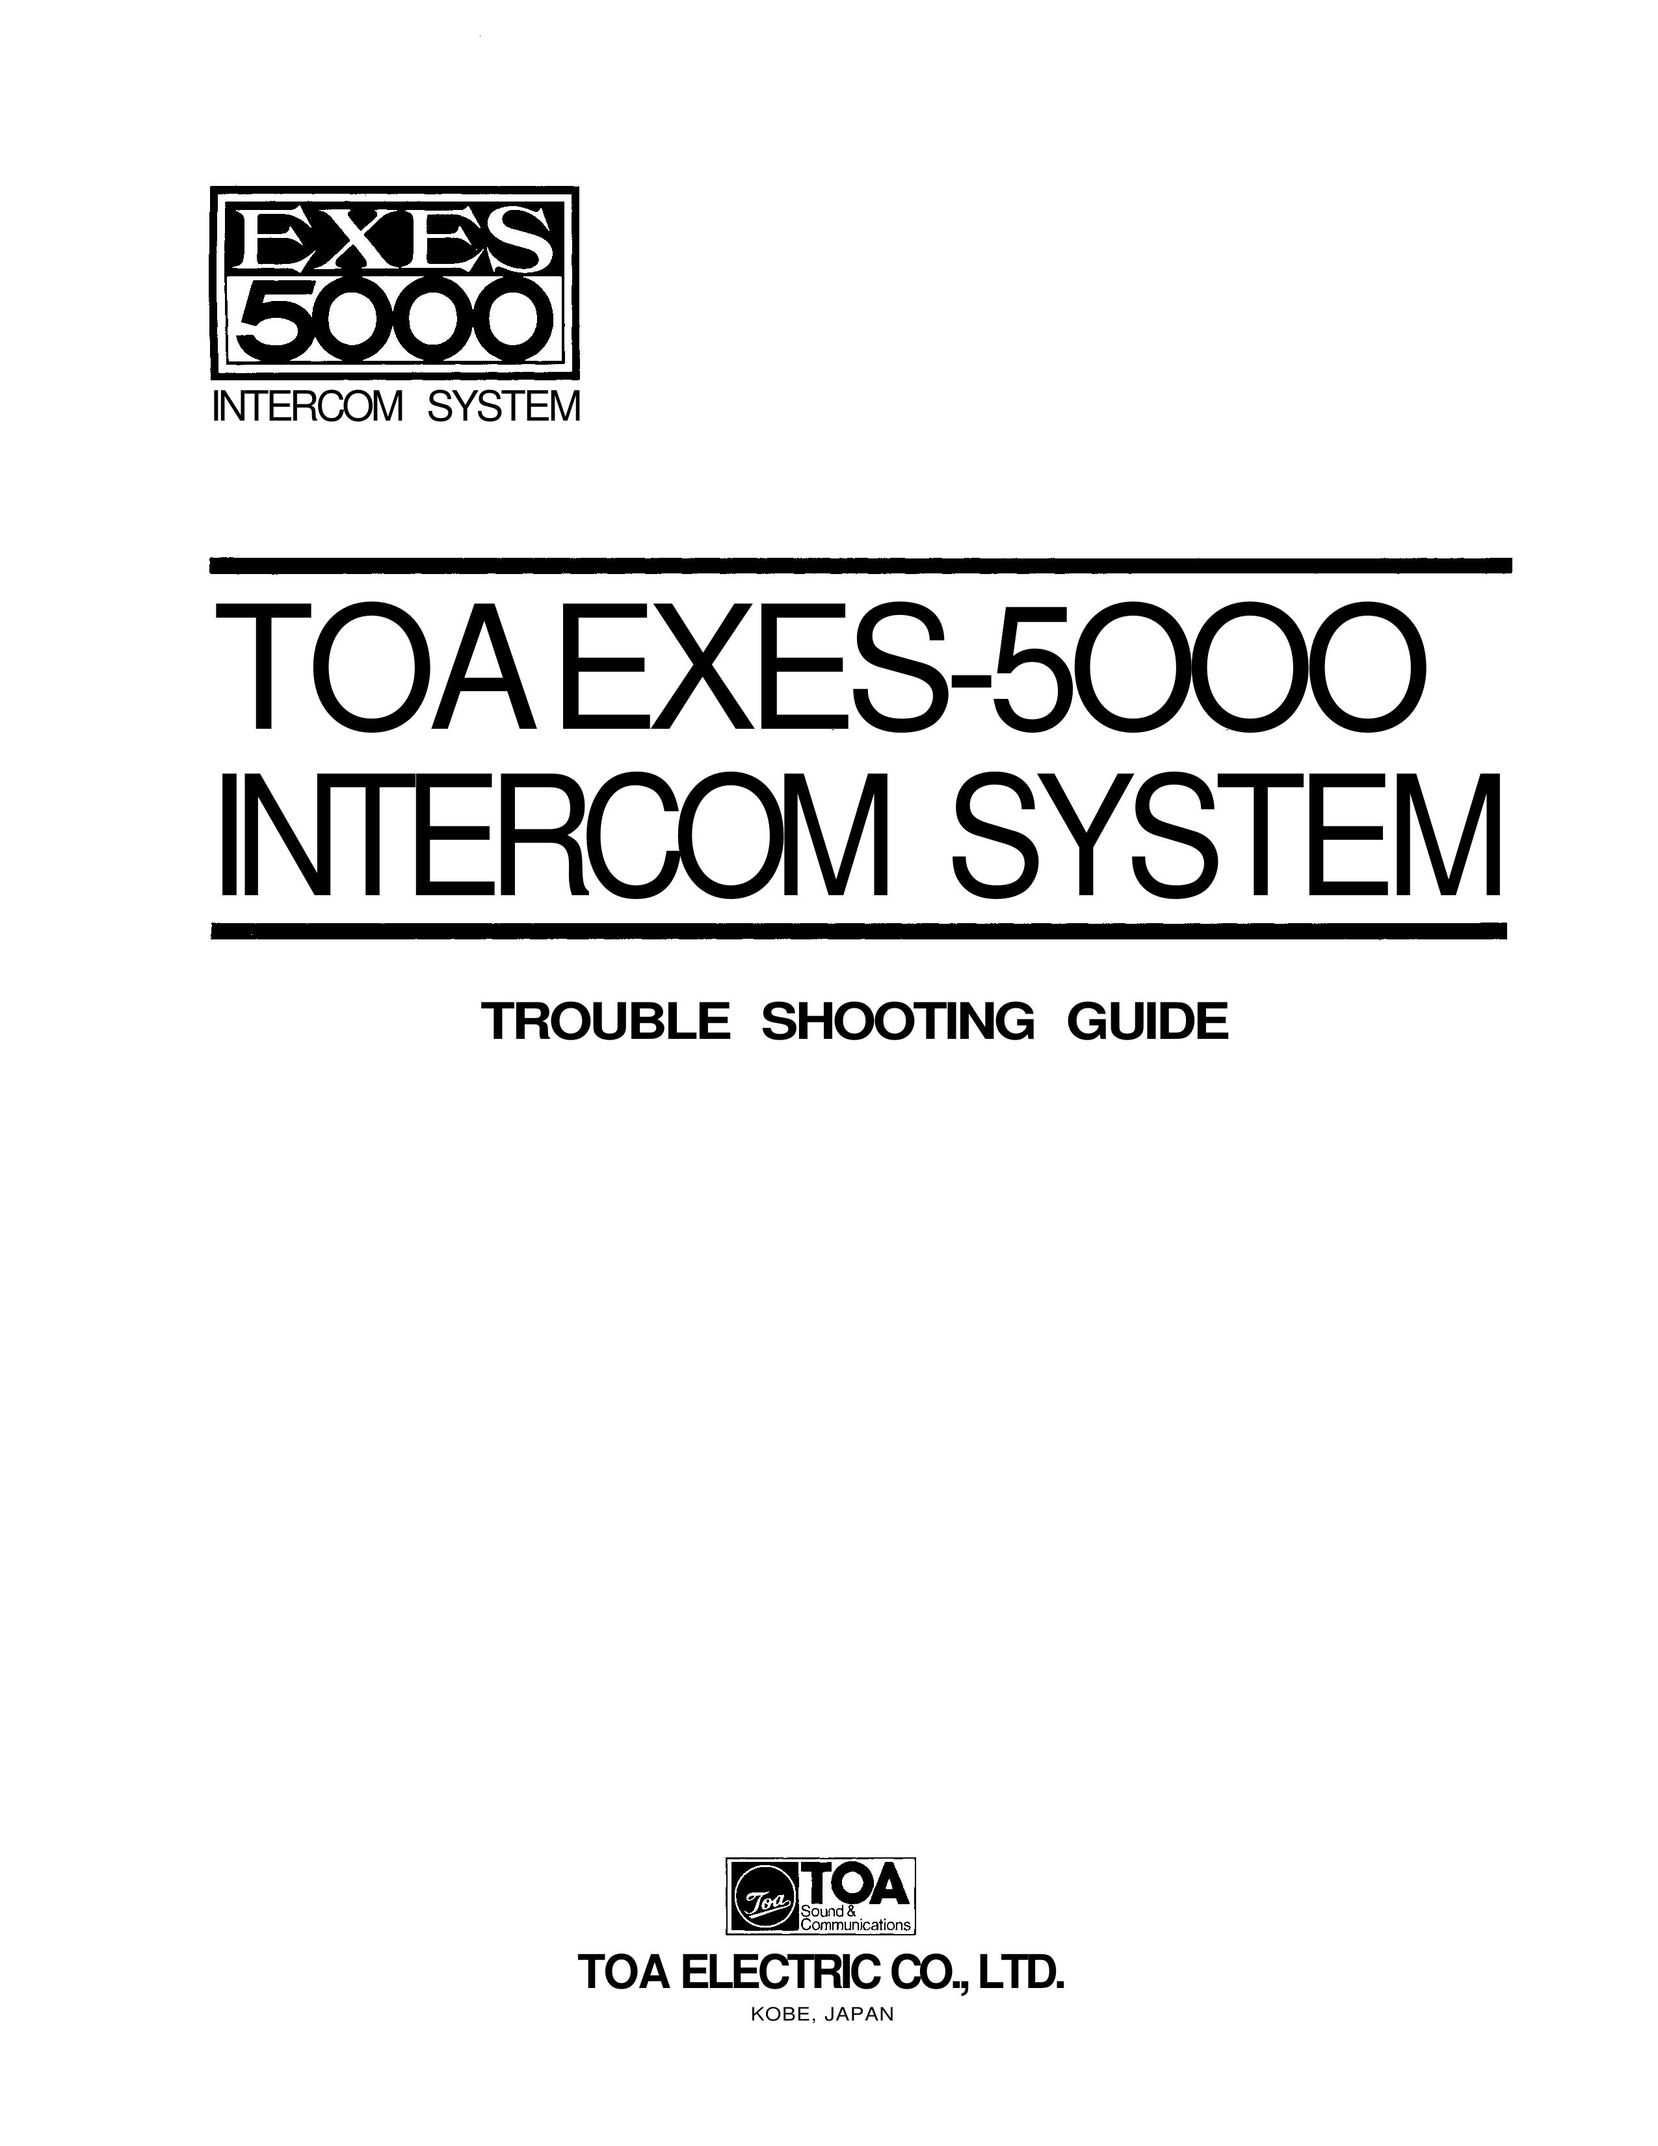 TOA Electronics TOAEXES-5OOO Intercom System User Manual